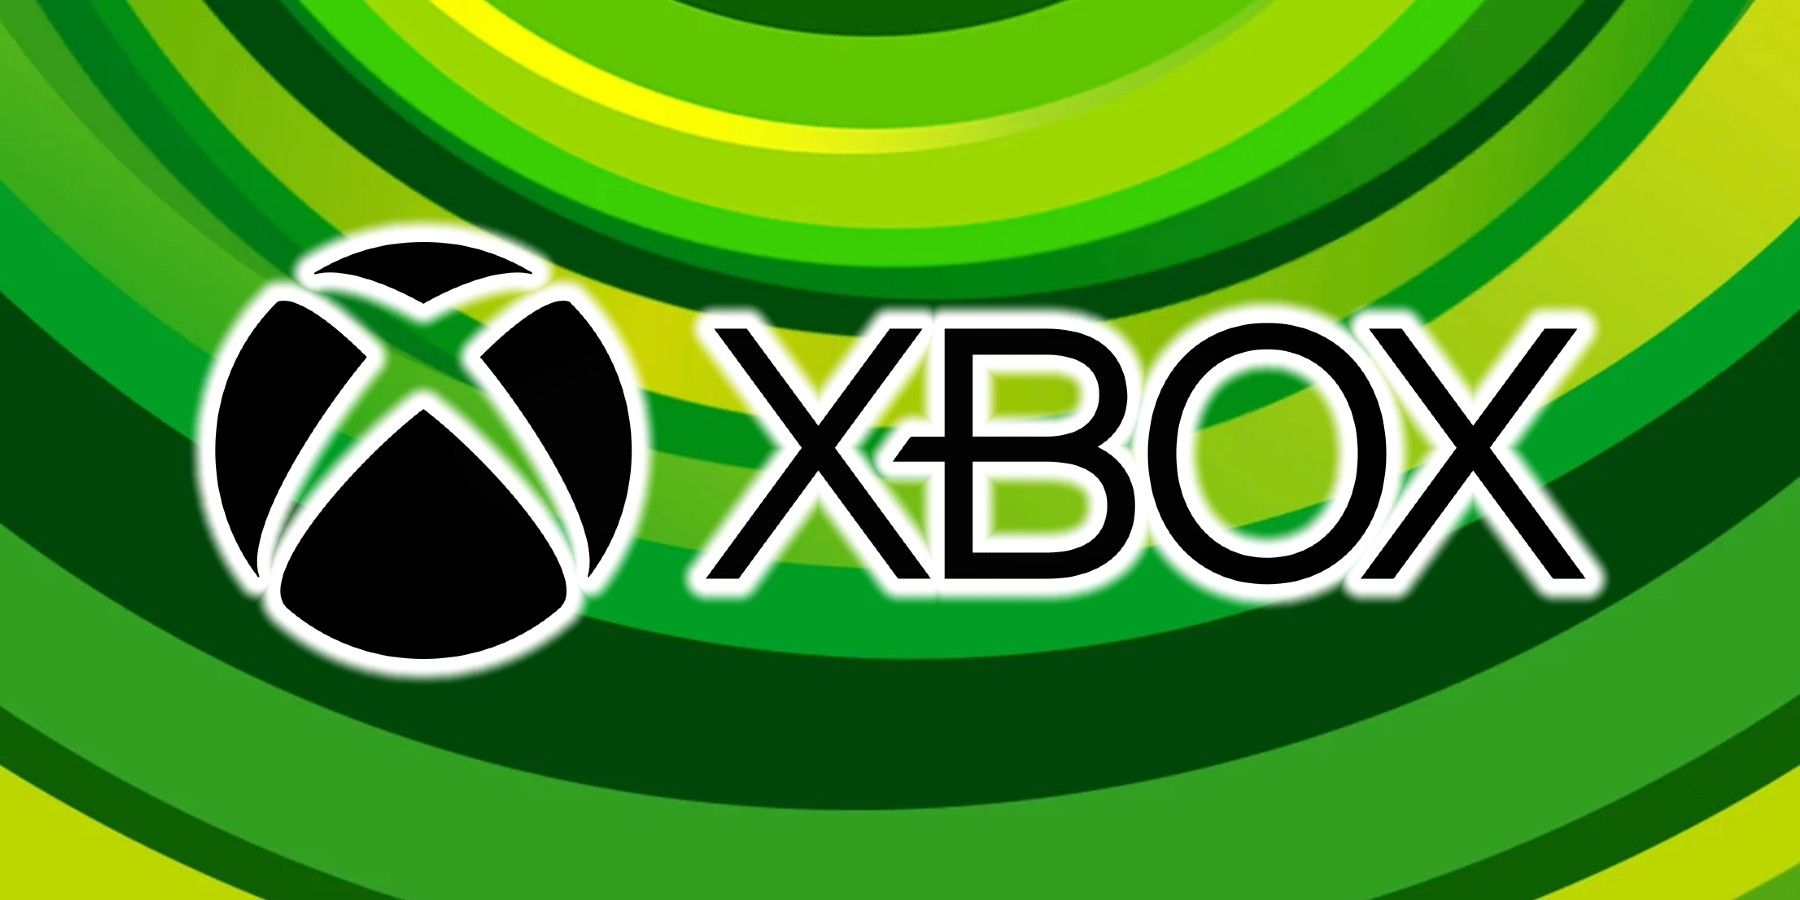 xbox-logo-black-green-swirl-background